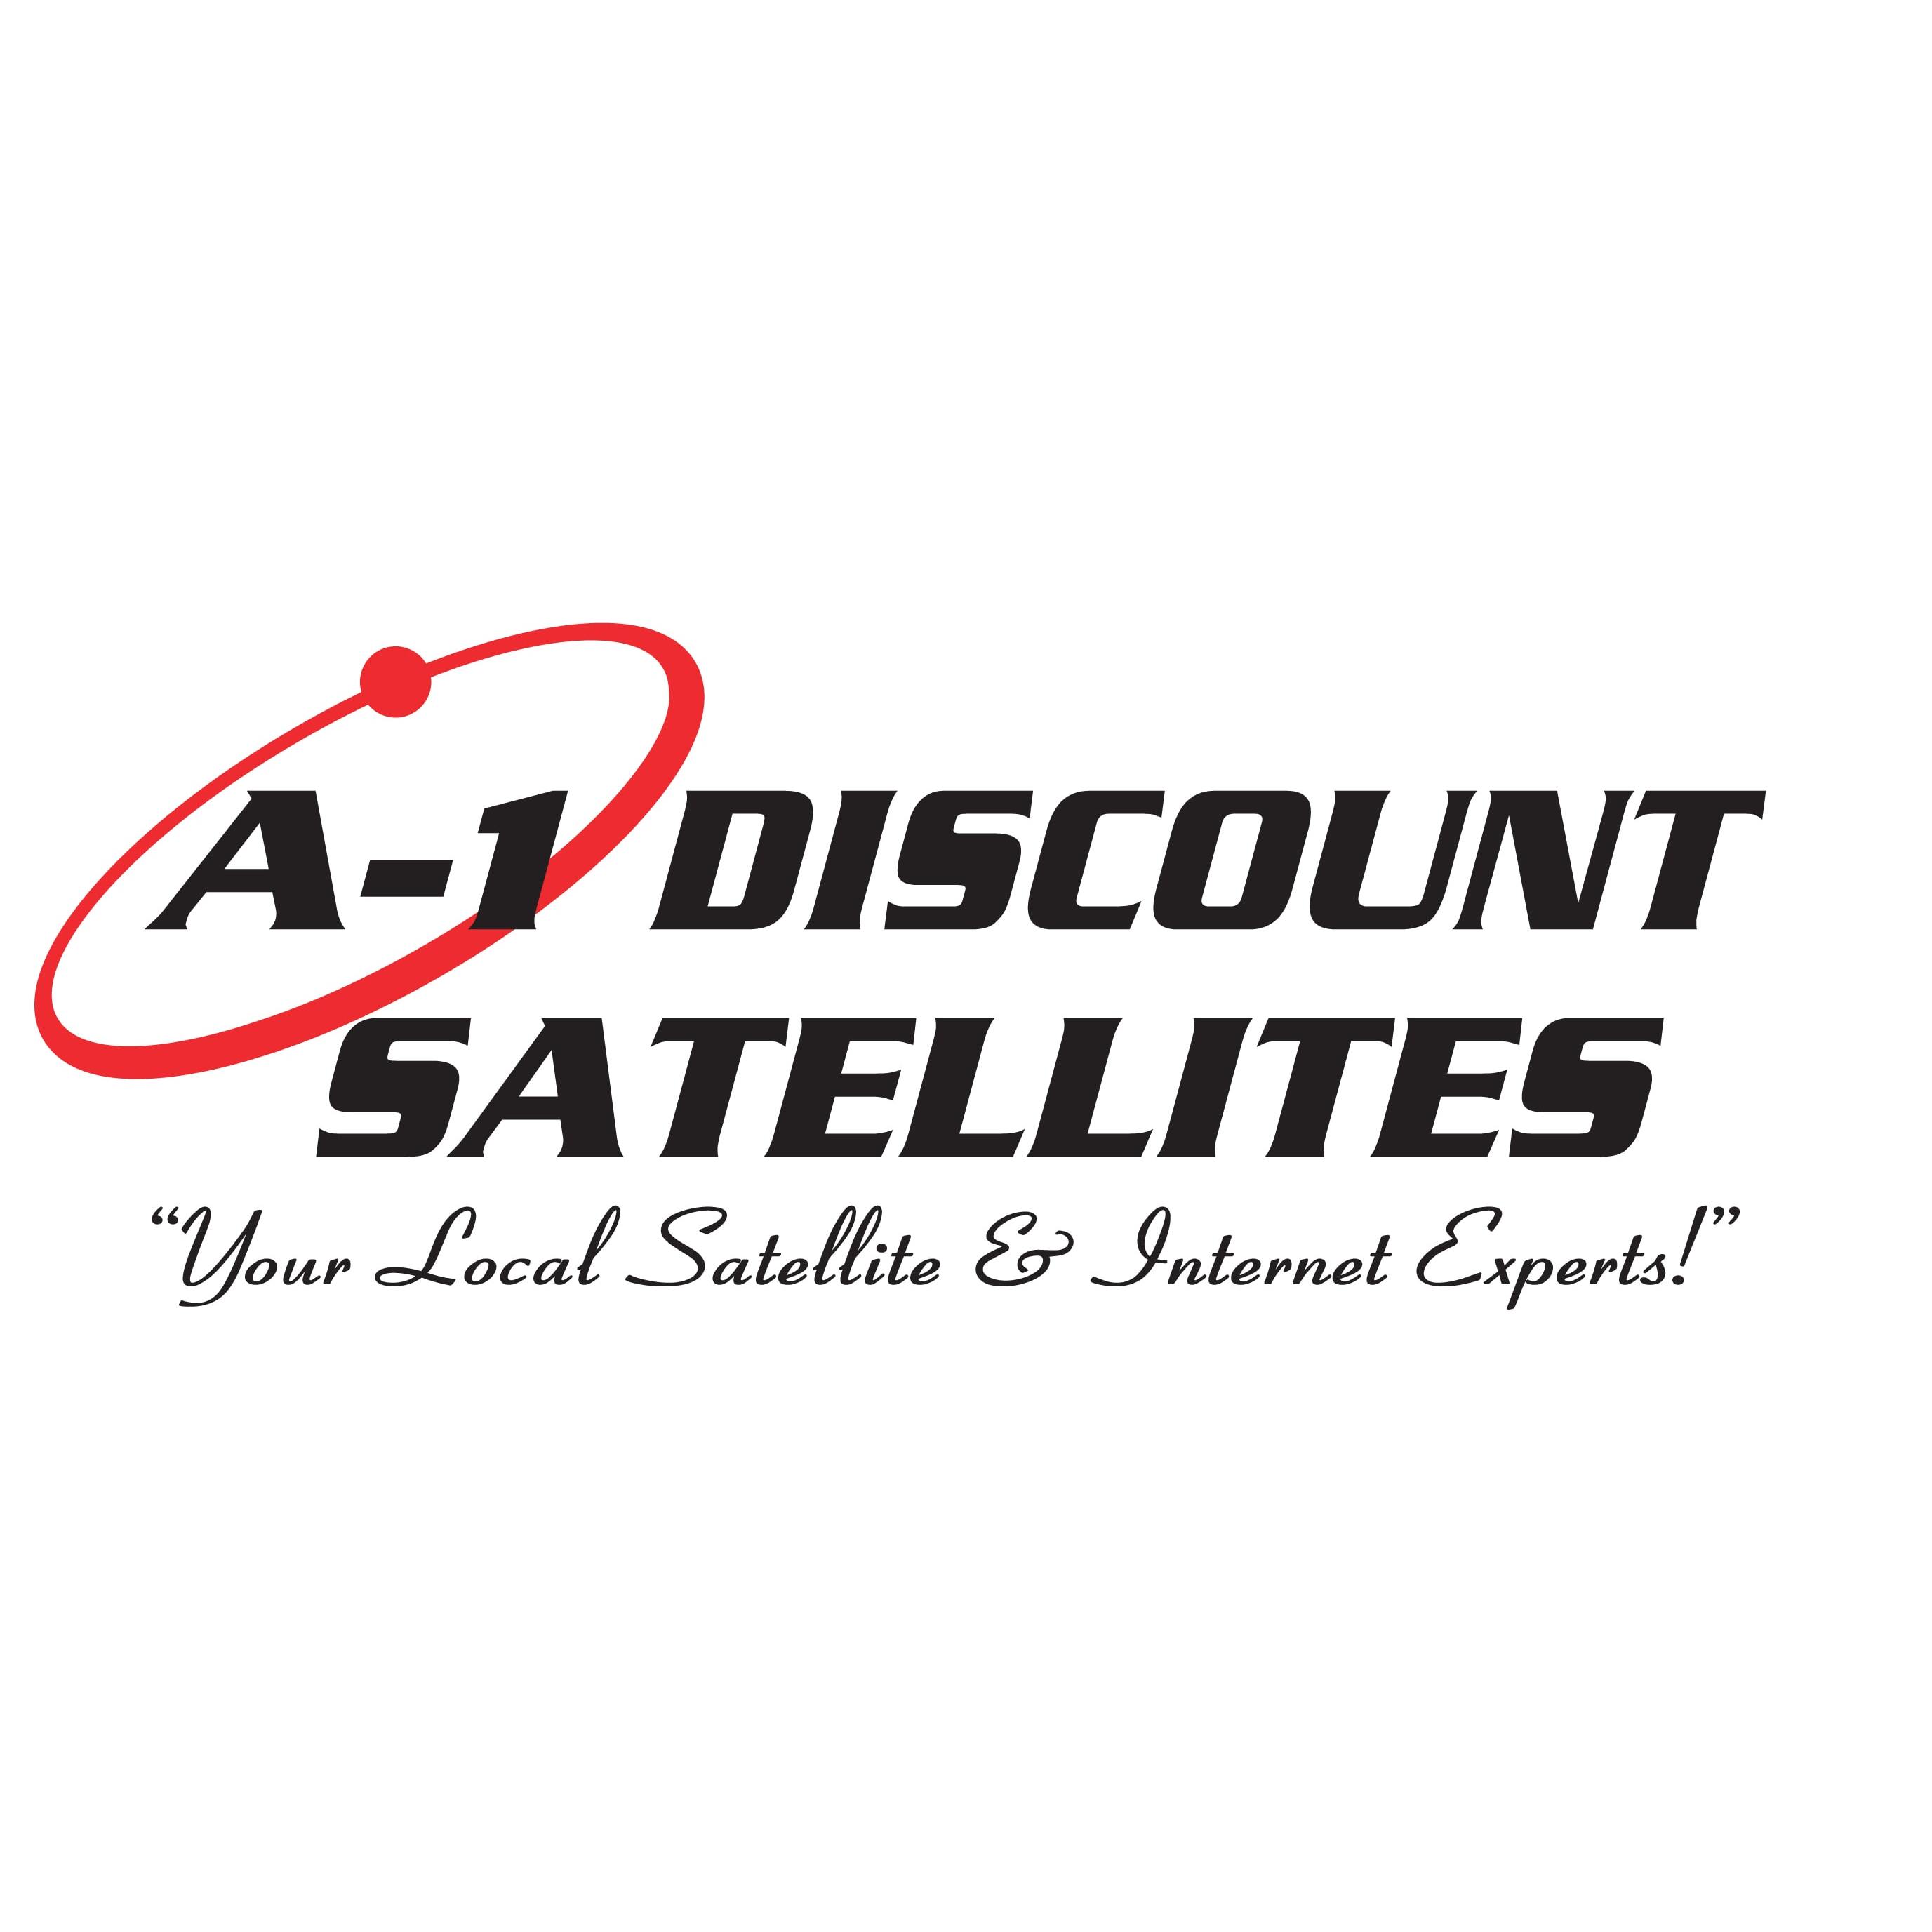 A -1 Discount Satellites